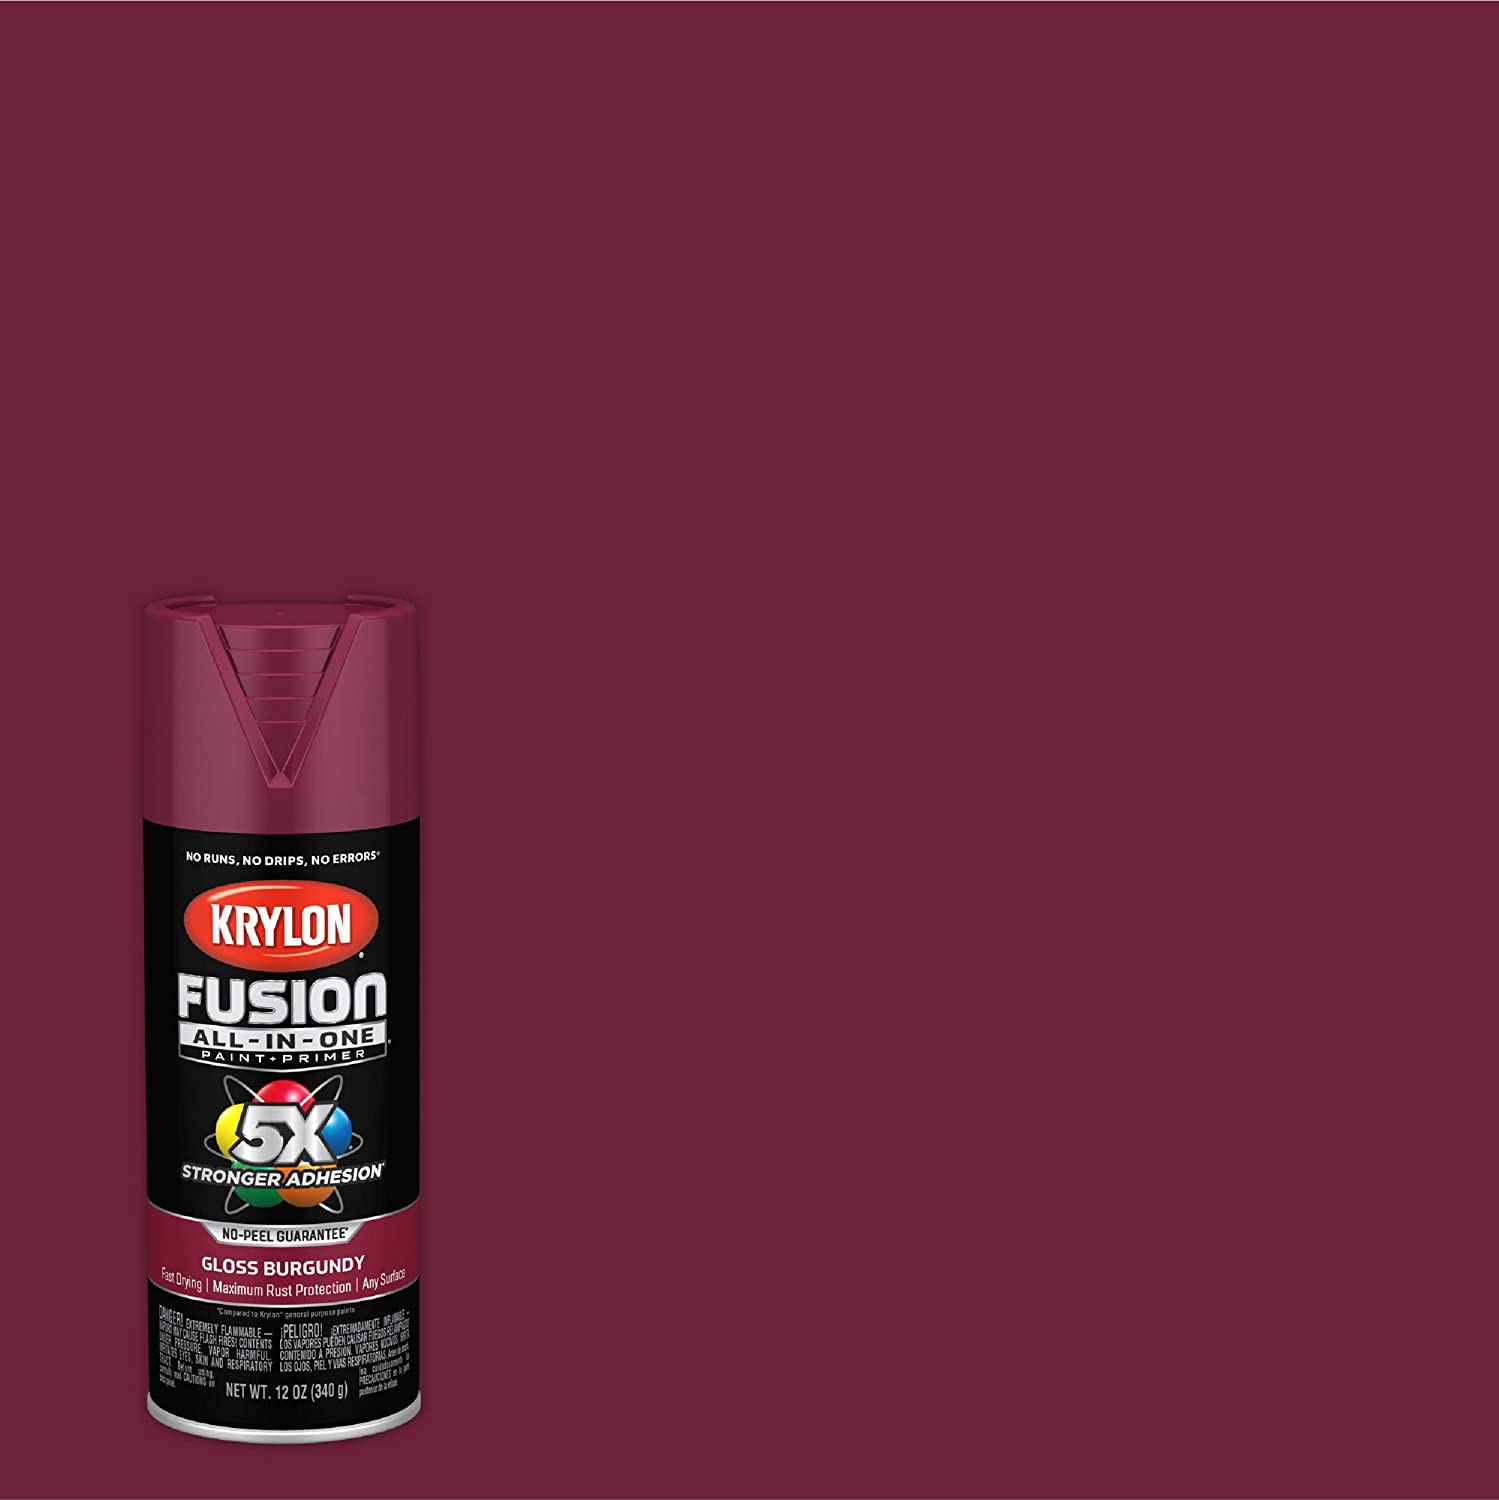 Krylon Fusion All-In-One Spray Paint shade